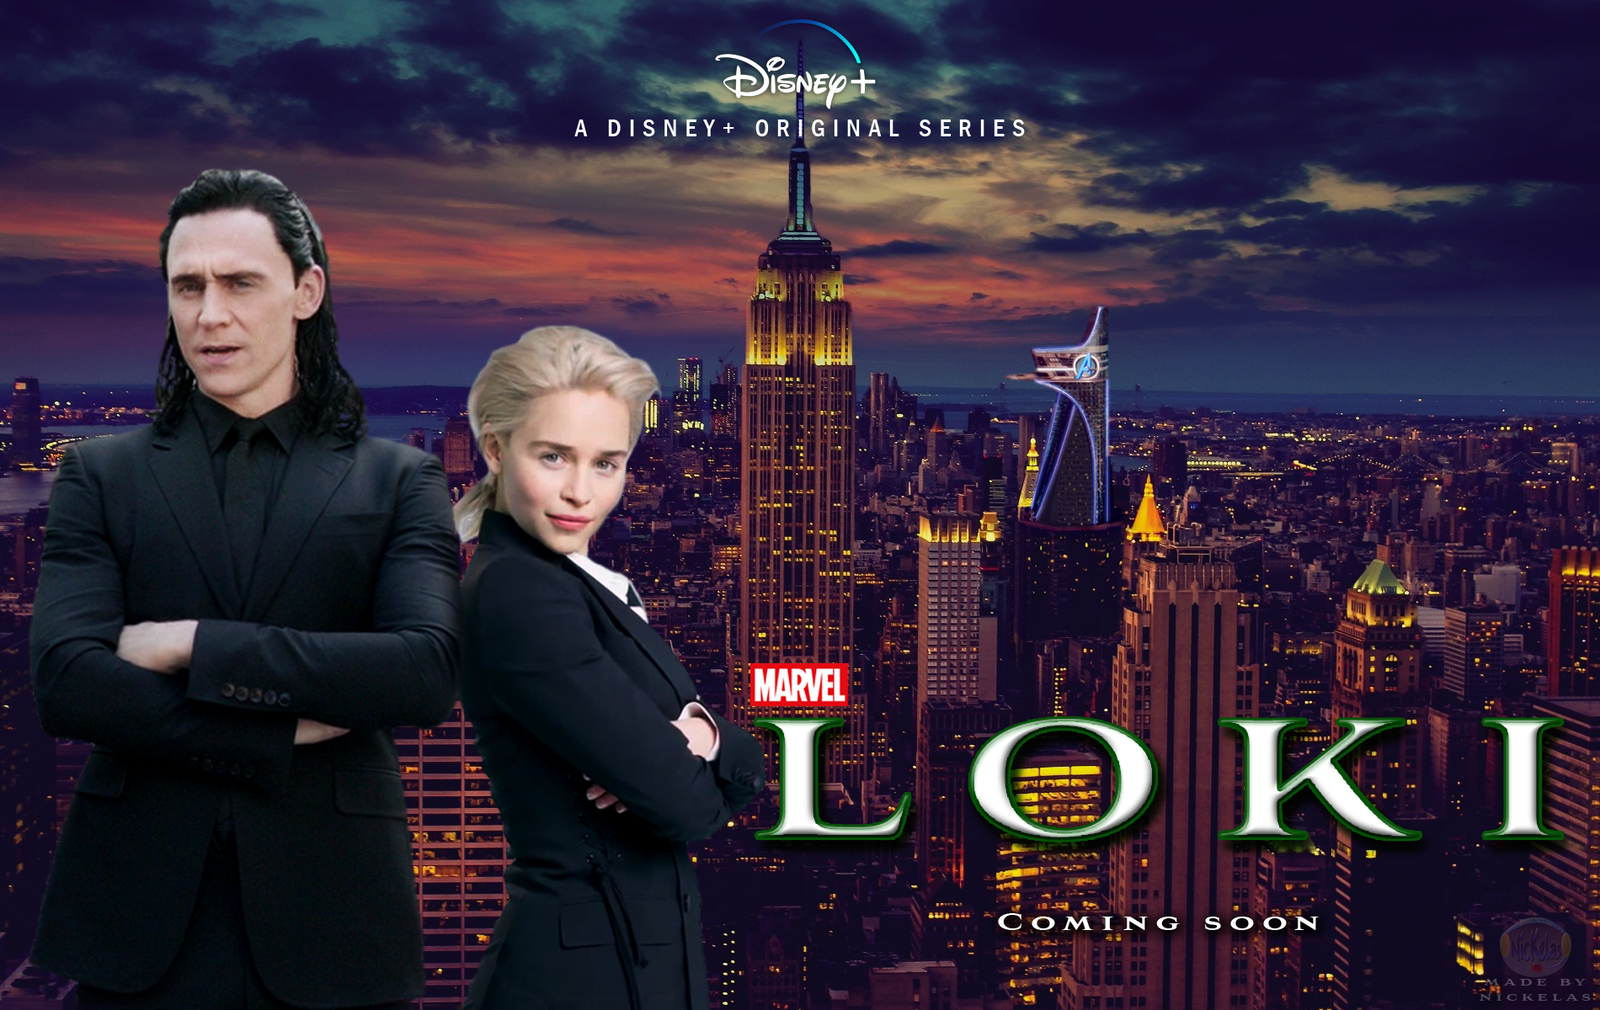 If Loki was a detective series - Фанфик, Fan art, Poster, Serials, Emilia Clarke, Tom Hiddleston, Marvel, Loki, My